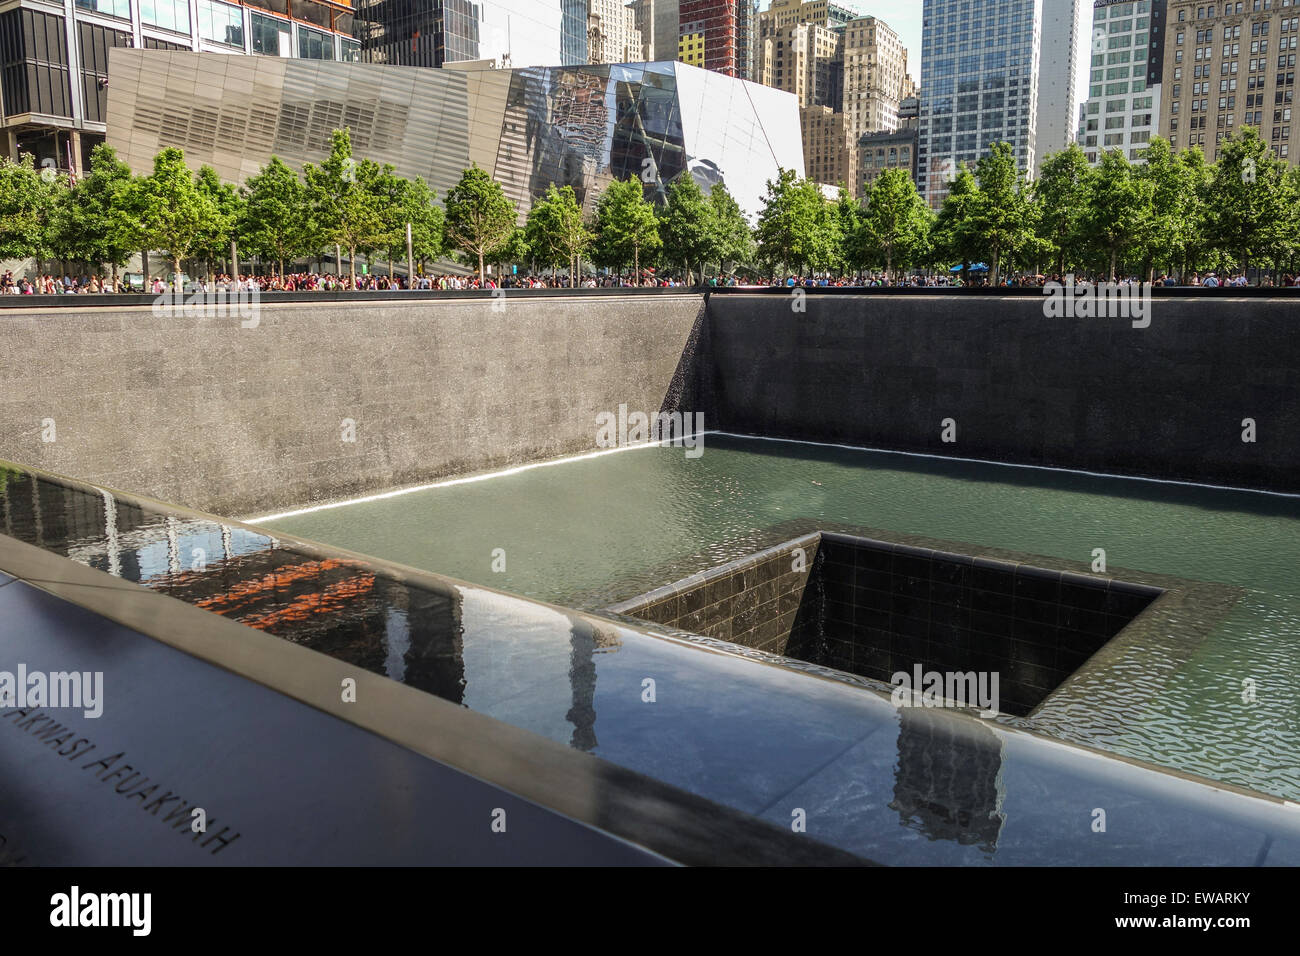 Le 11 septembre, National Memorial & Museum, New York City, USA. Banque D'Images